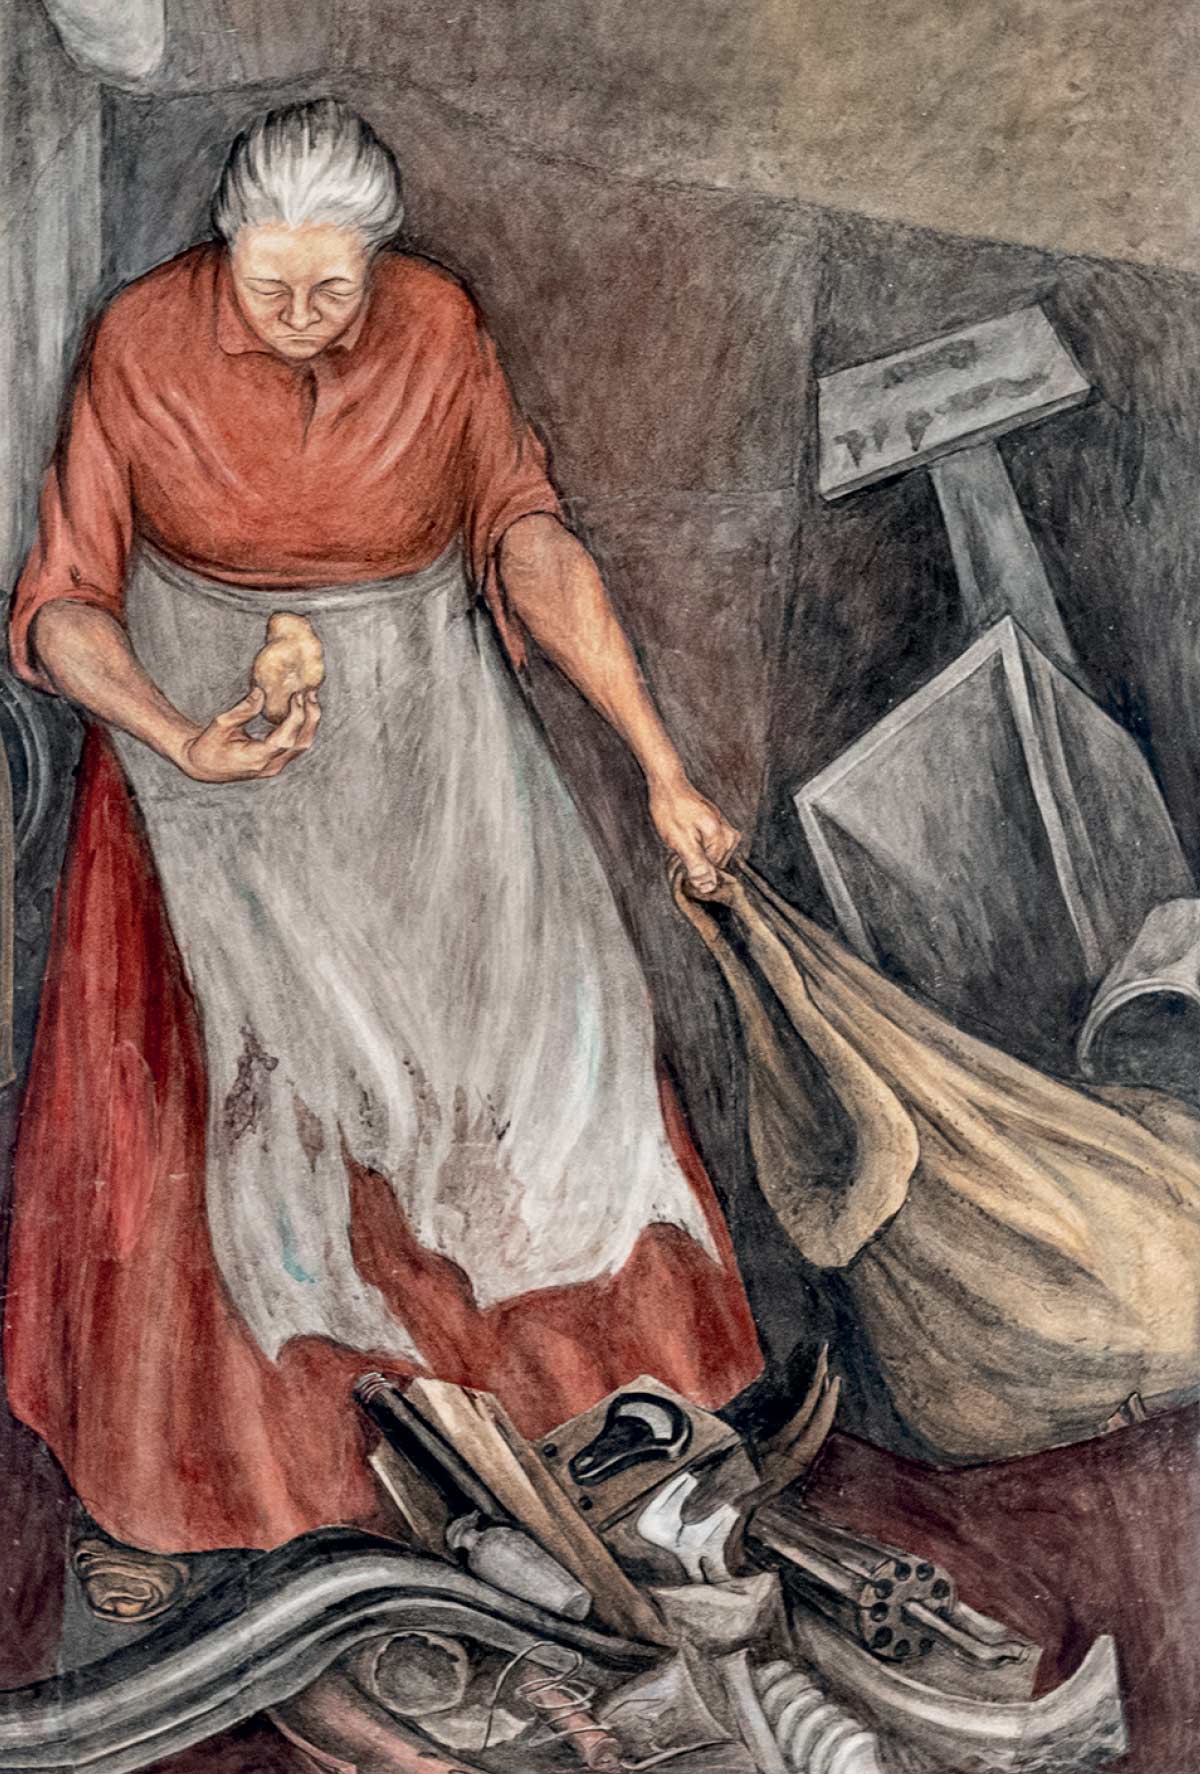 Fresco: elderly woman in tattered garment looking for food amid debris